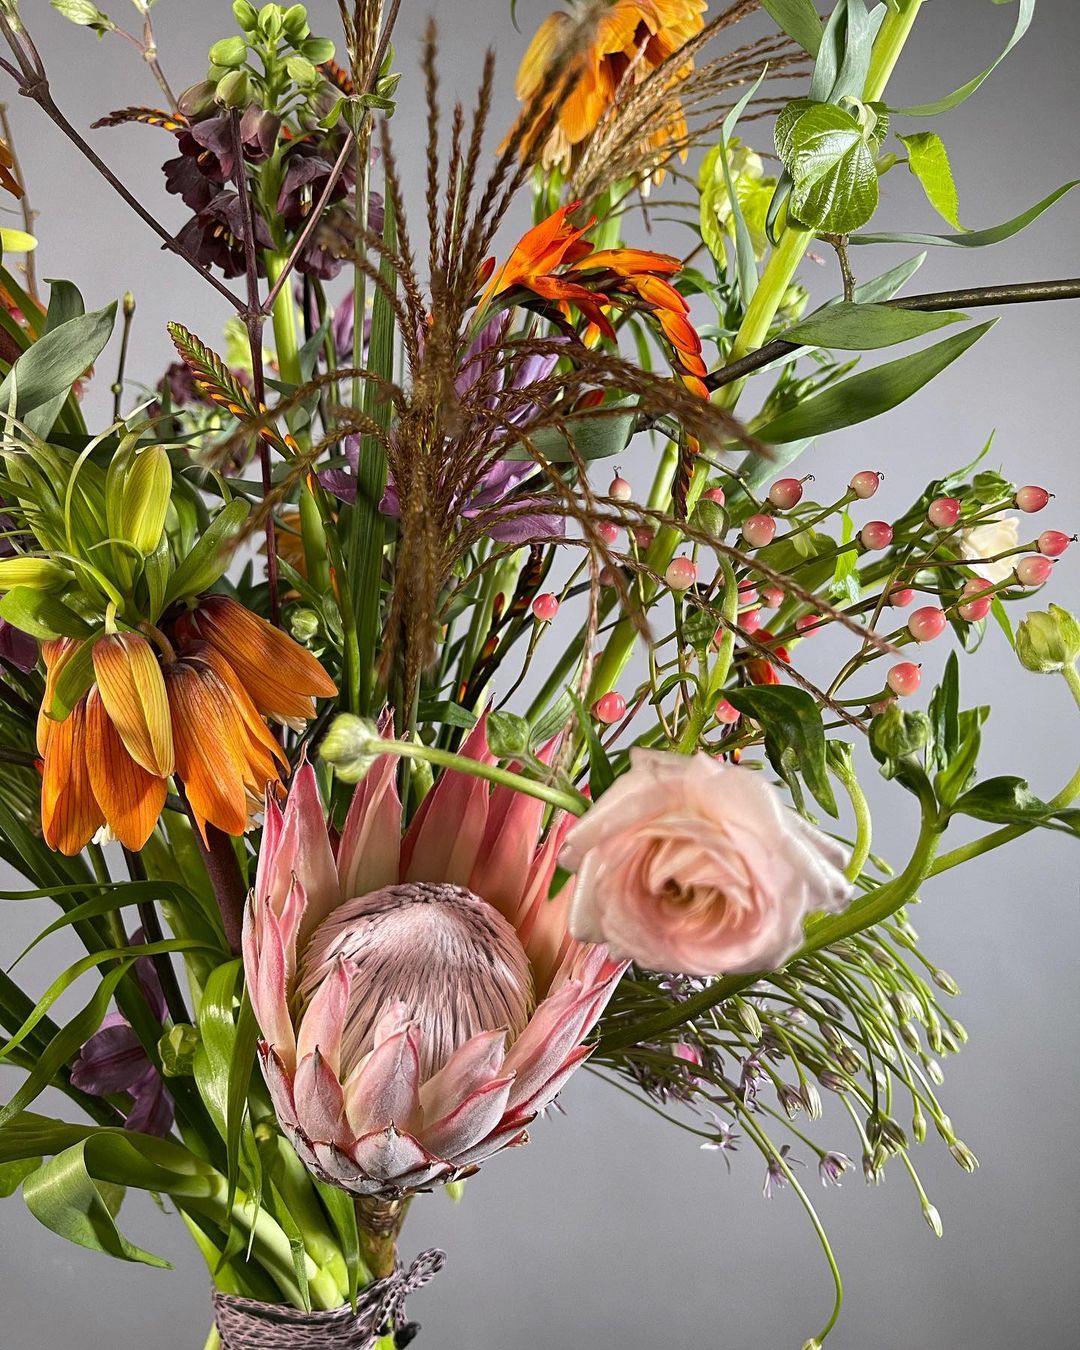 Commercial Bouquet by Dmitry Turcan on Thursd